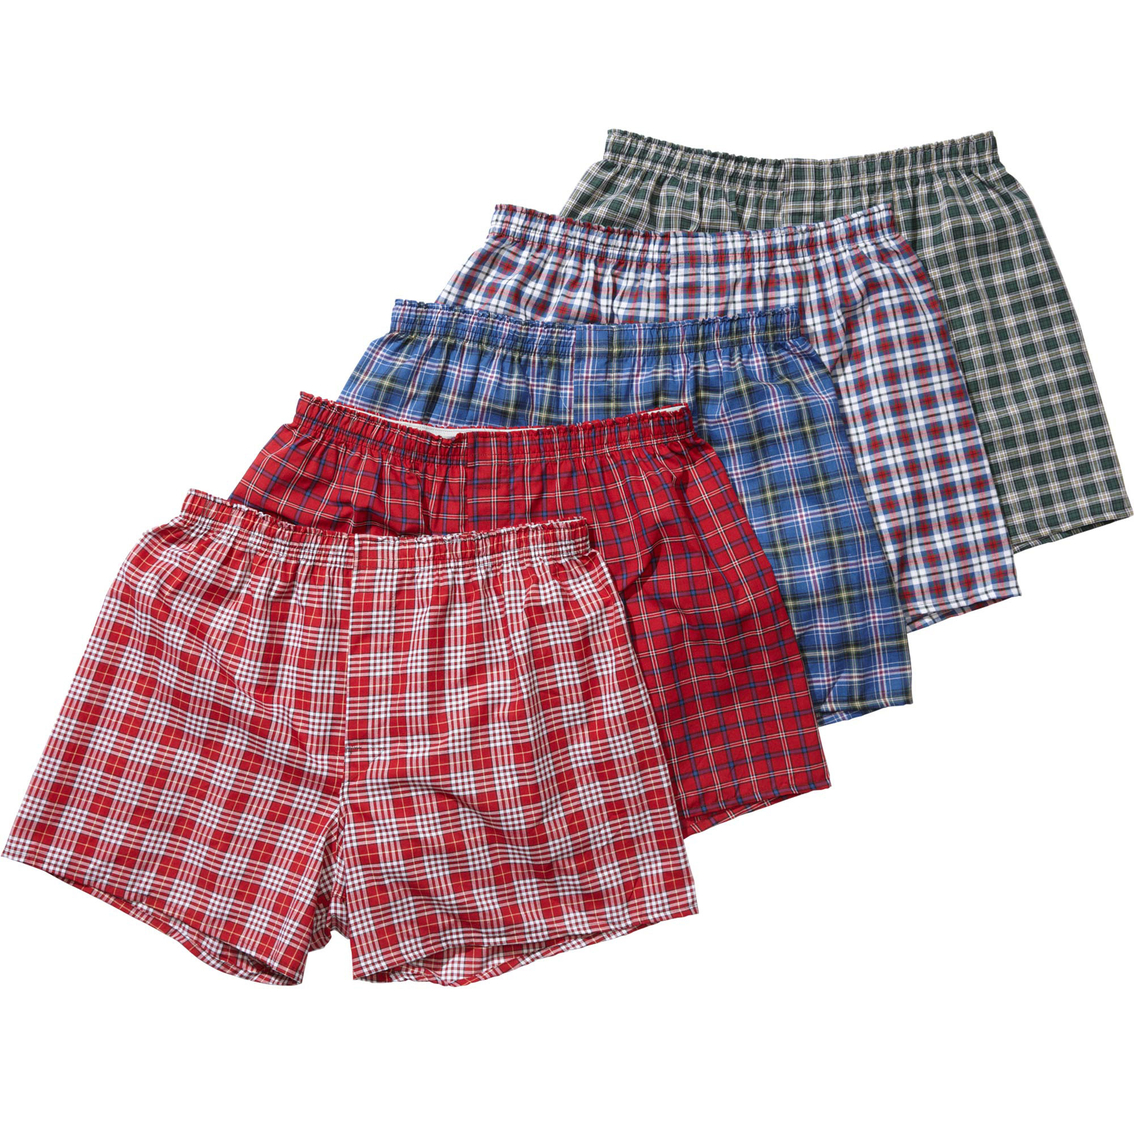 Hanes Men's 5 Pk. Tagless Tartan Boxer Shorts | Underwear | Clothing ...